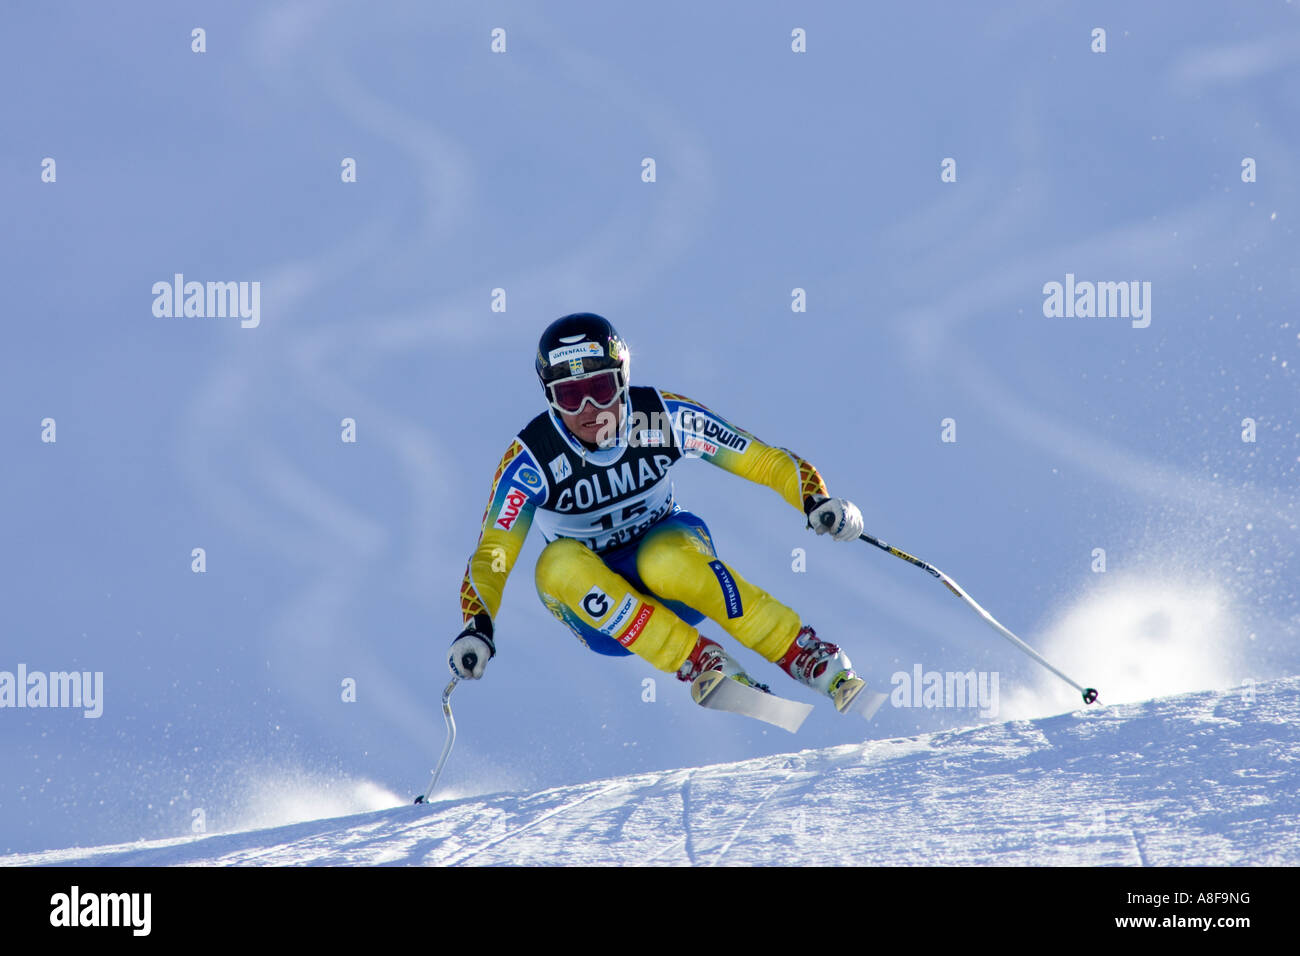 Downhill Ski Racer. Stock Photo